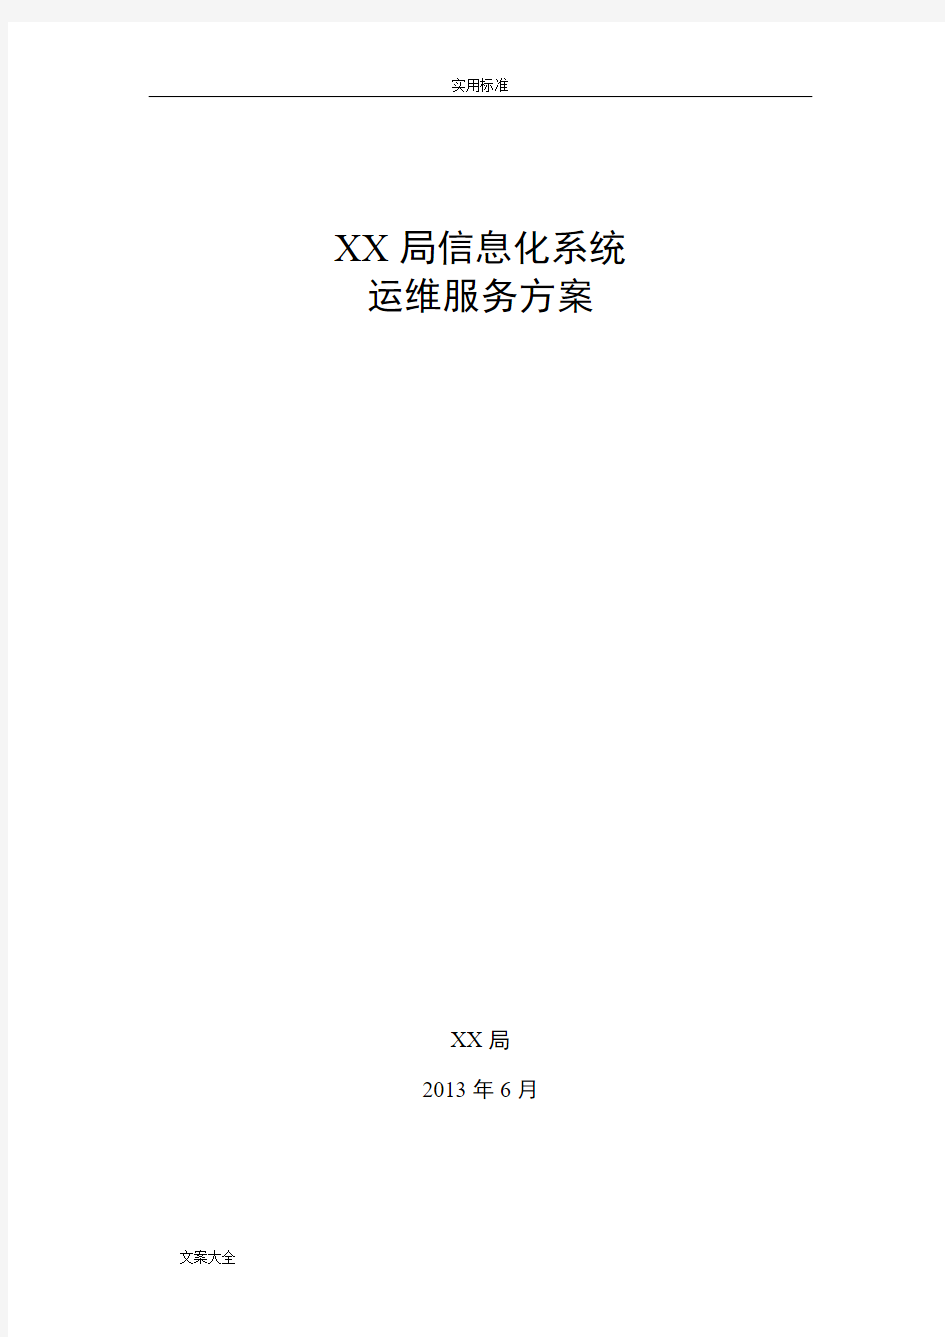 xxxx信息系统运维服务方案设计